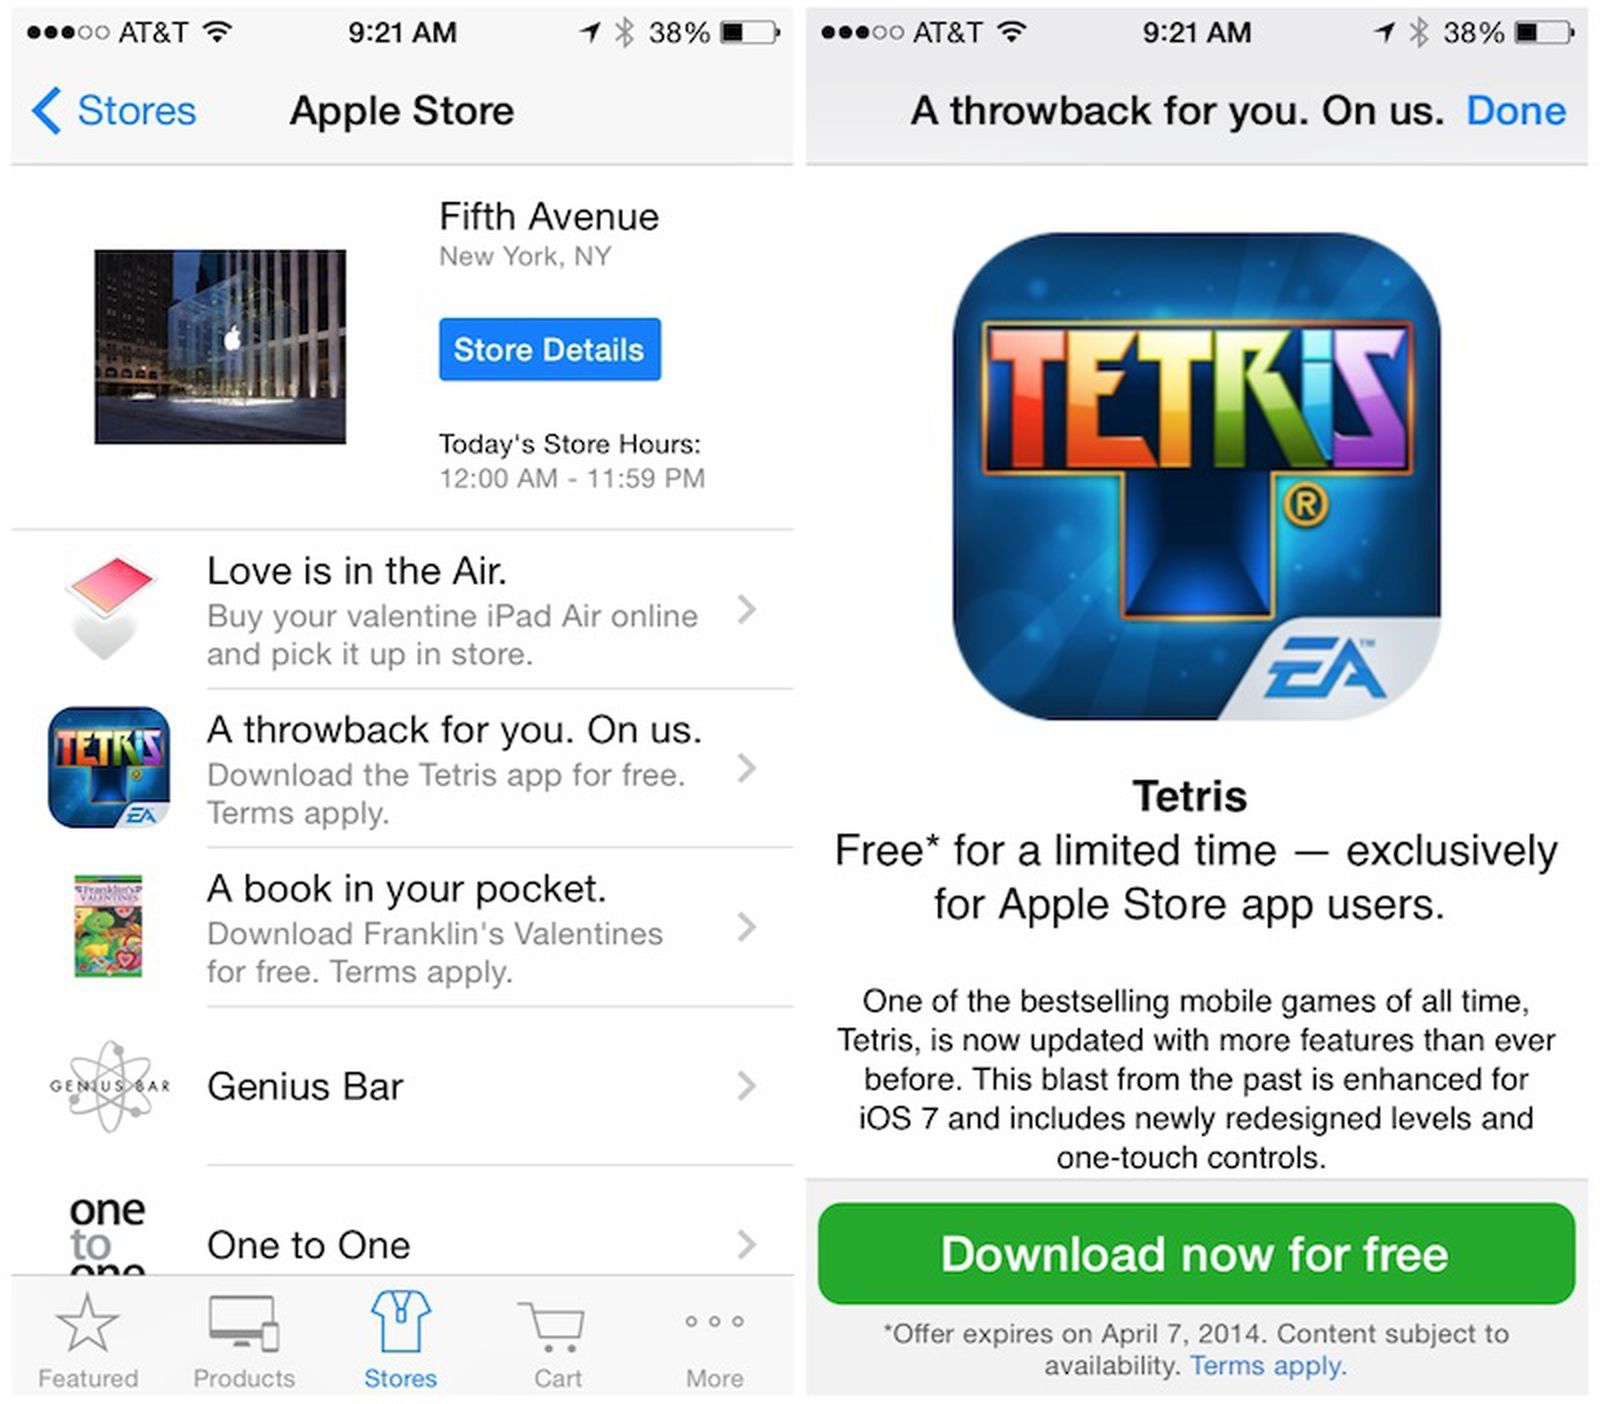 Official 'Tetris' App Now Free in Apple Store App Promotion - MacRumors